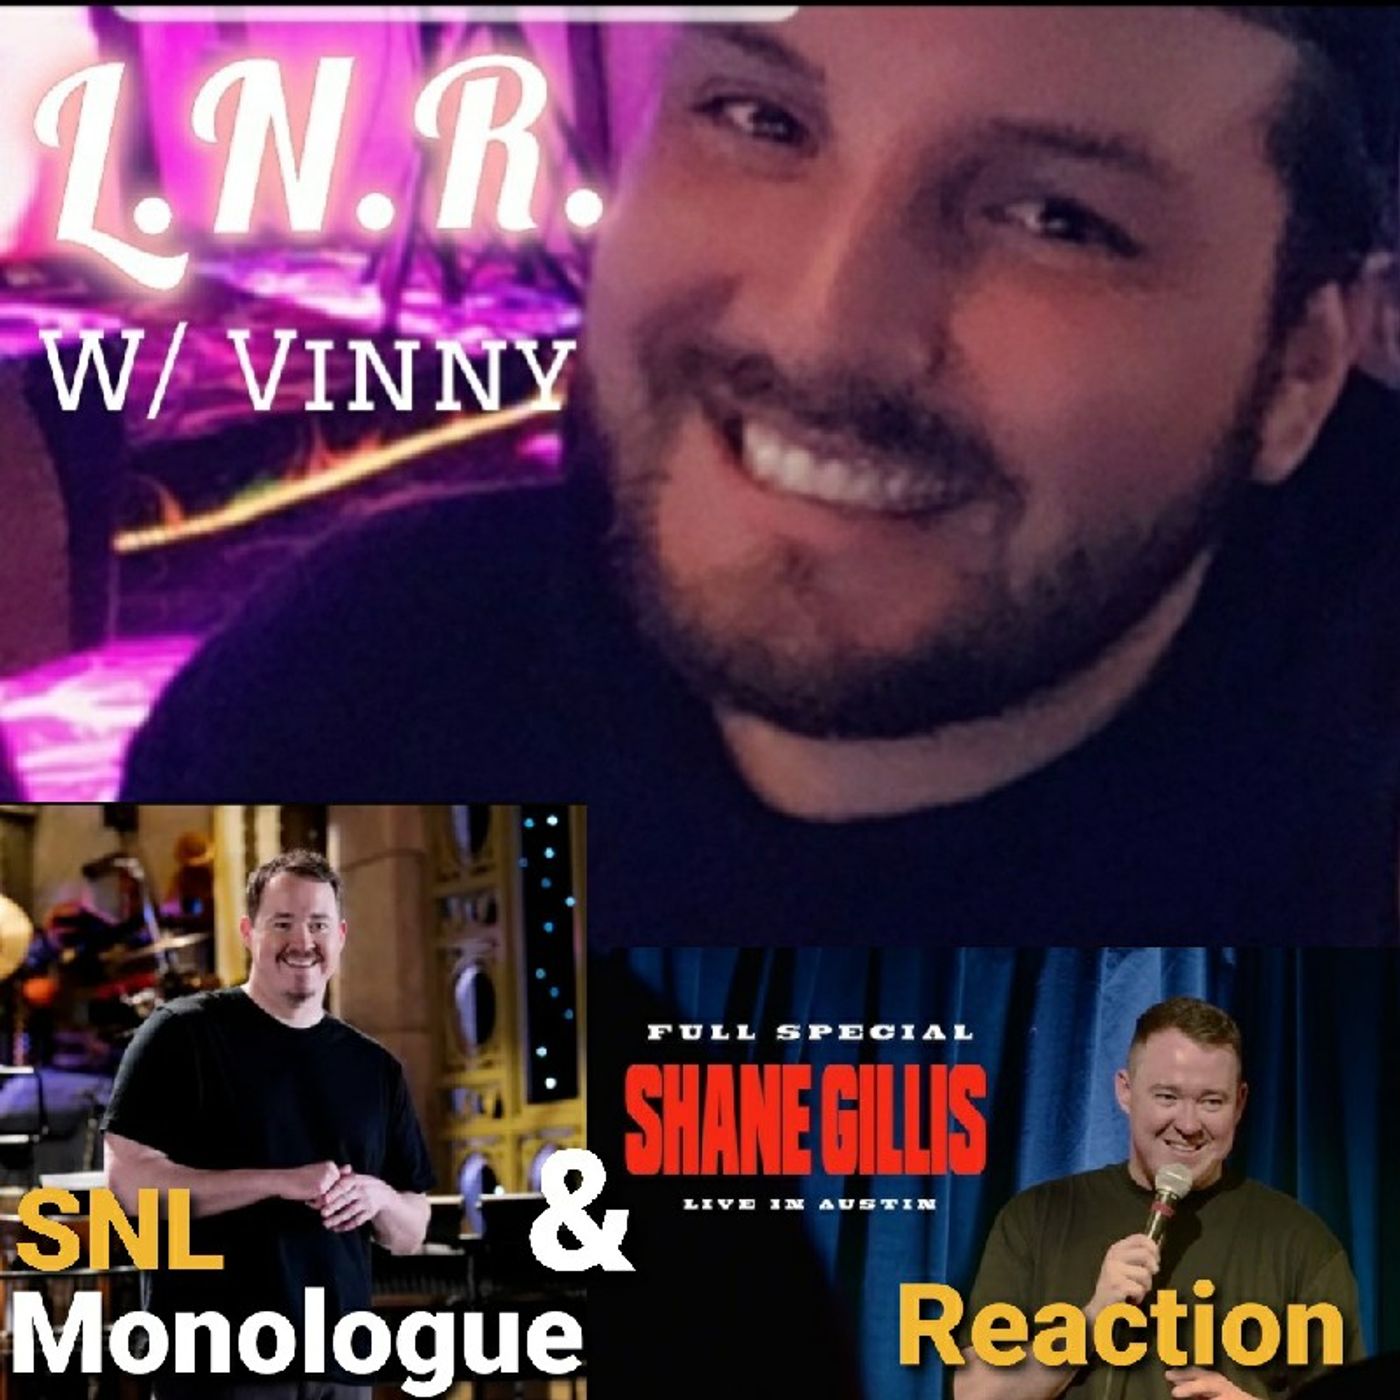 Shane Gillis: SNL Monologue & Live In Austin Reation!